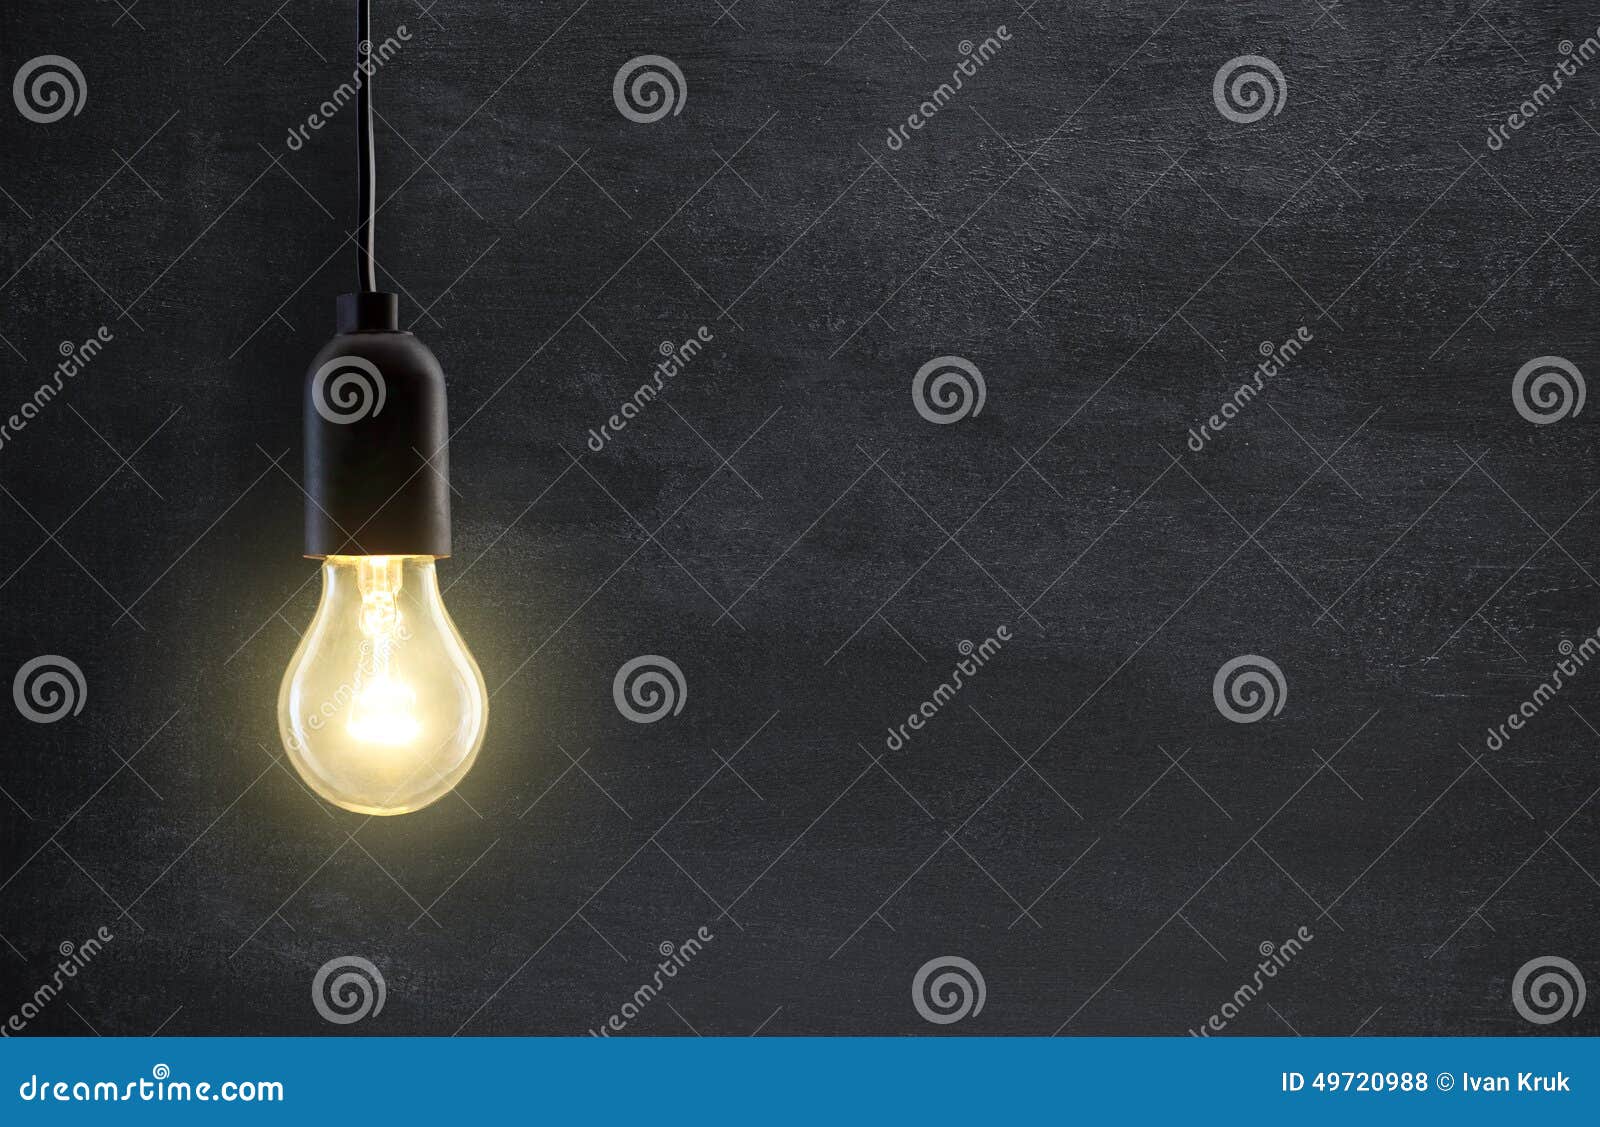 light bulb lamp on blackboard